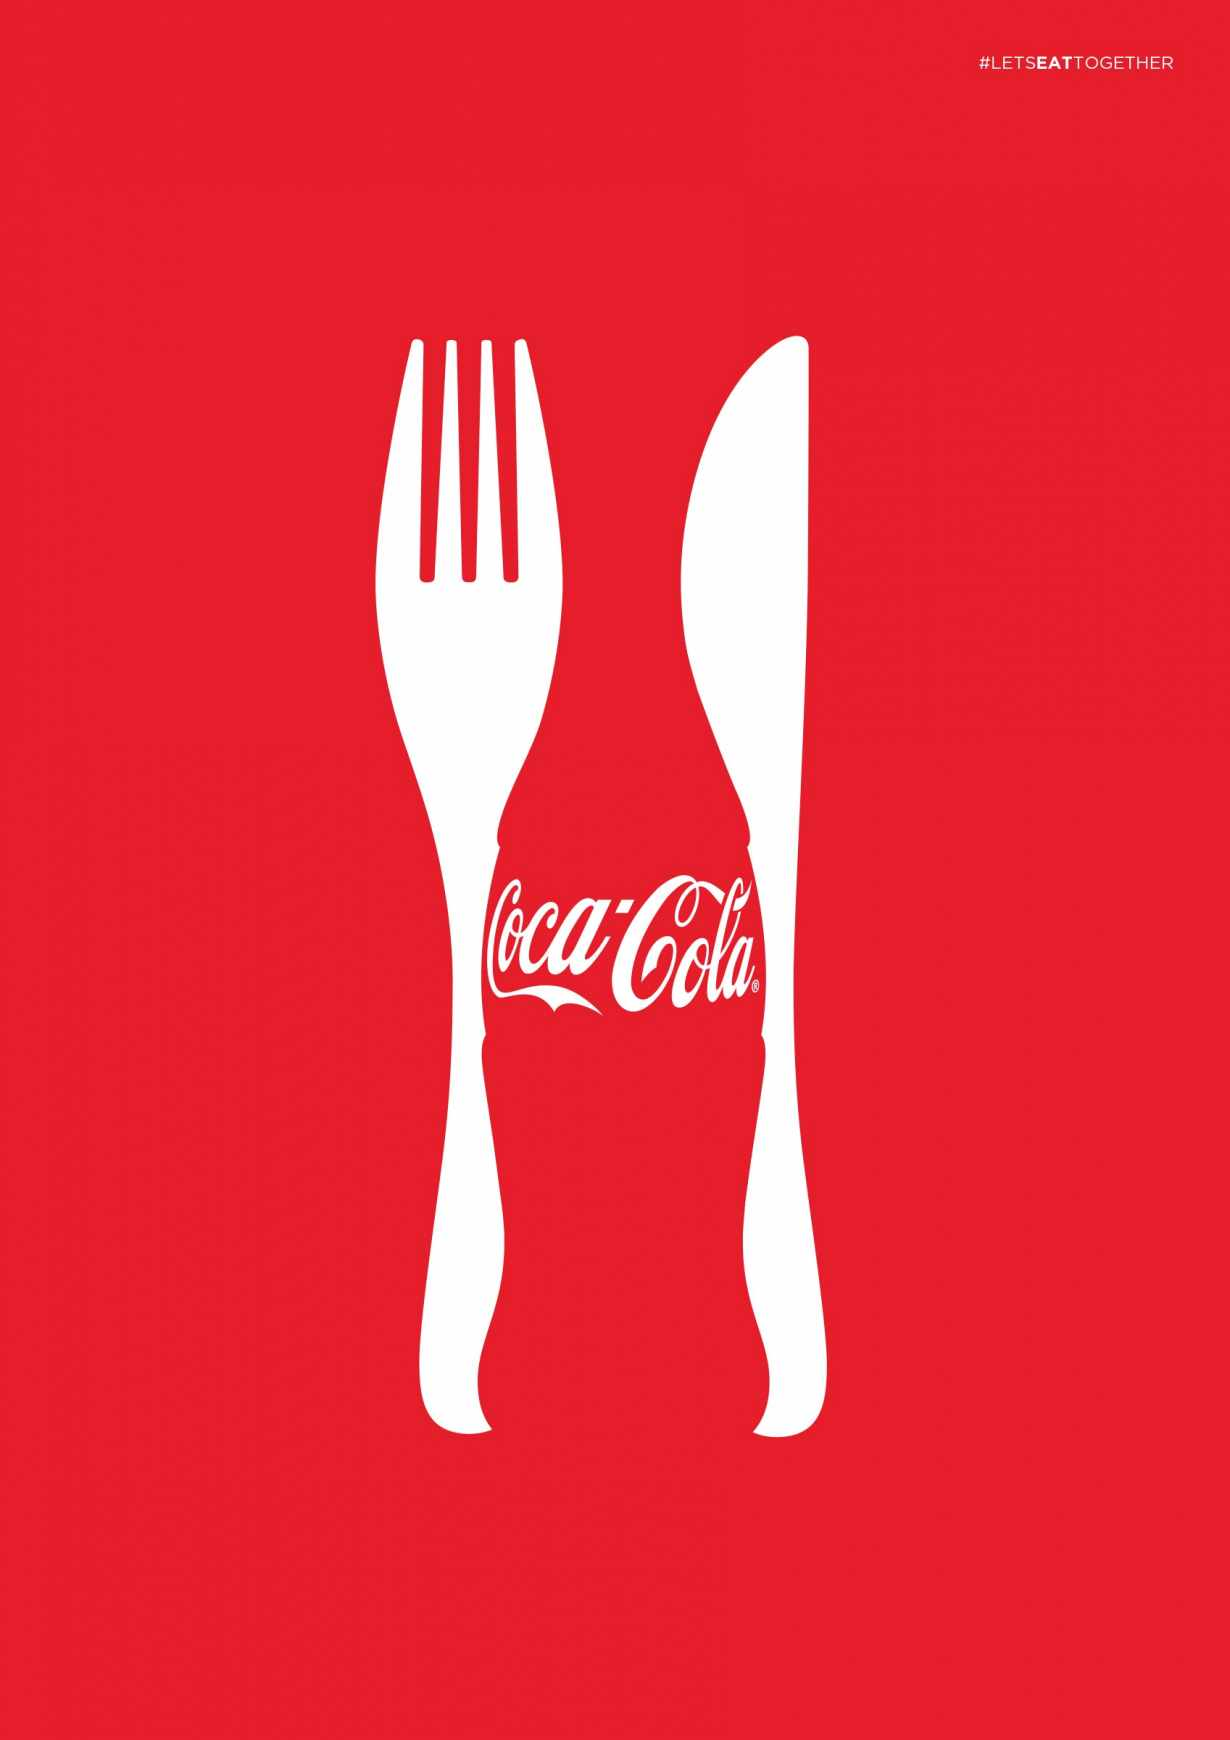 Coca-Cola: Let's Eat Together – Digital Buzz